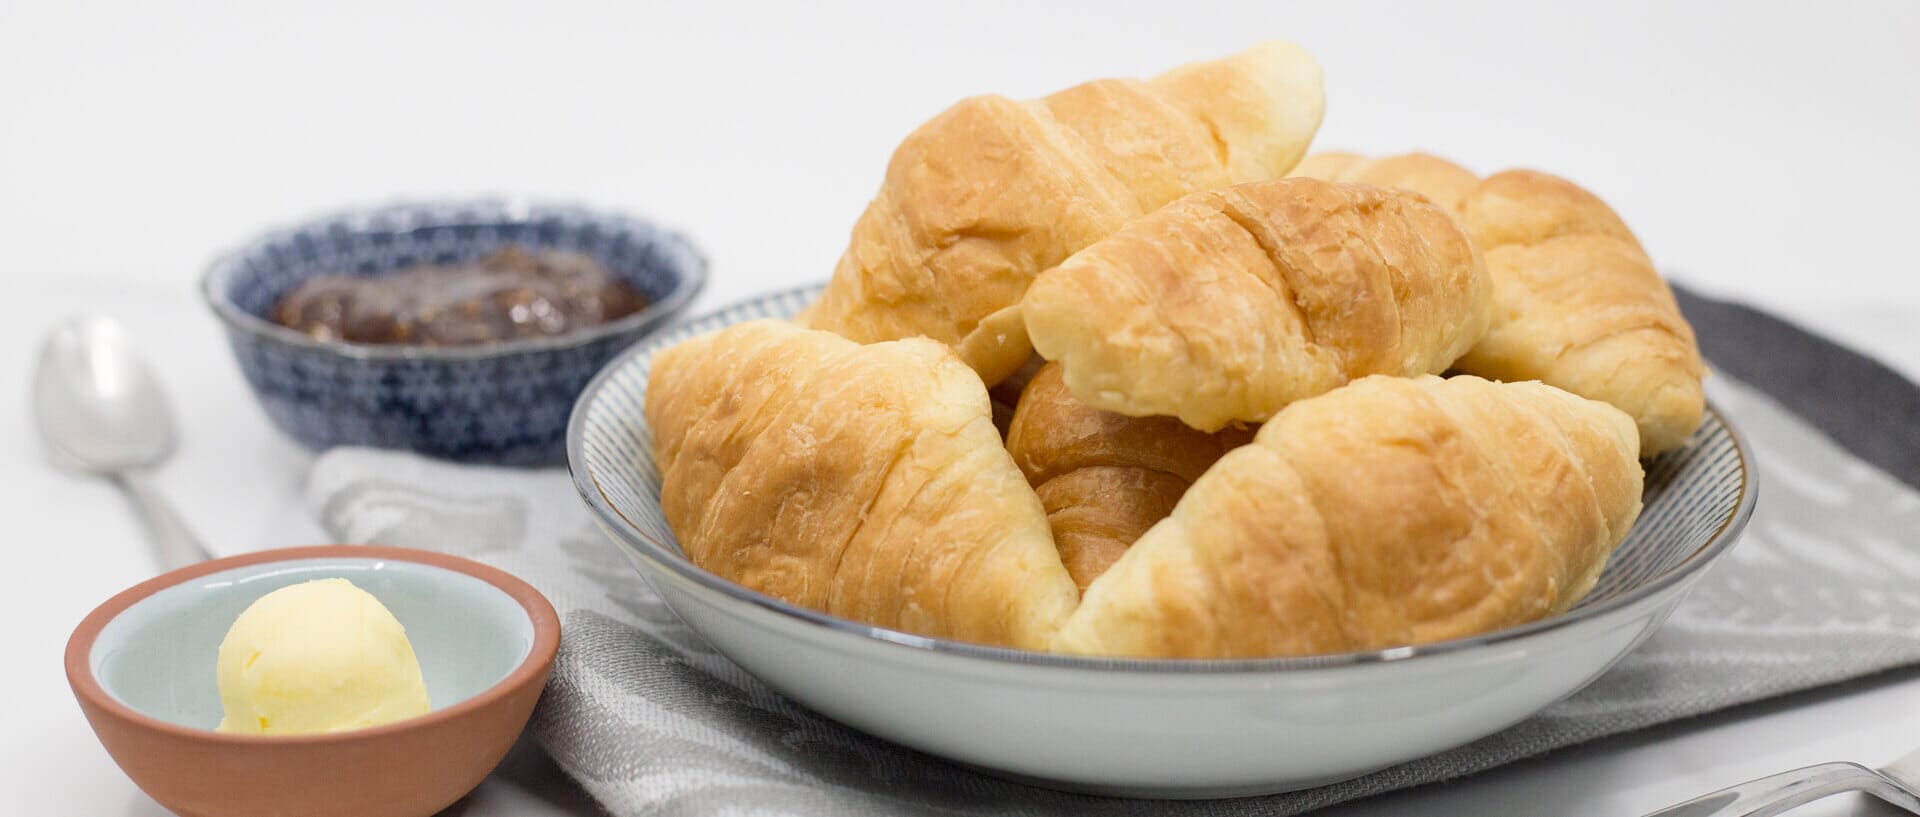 Mini Croissants Product Page header